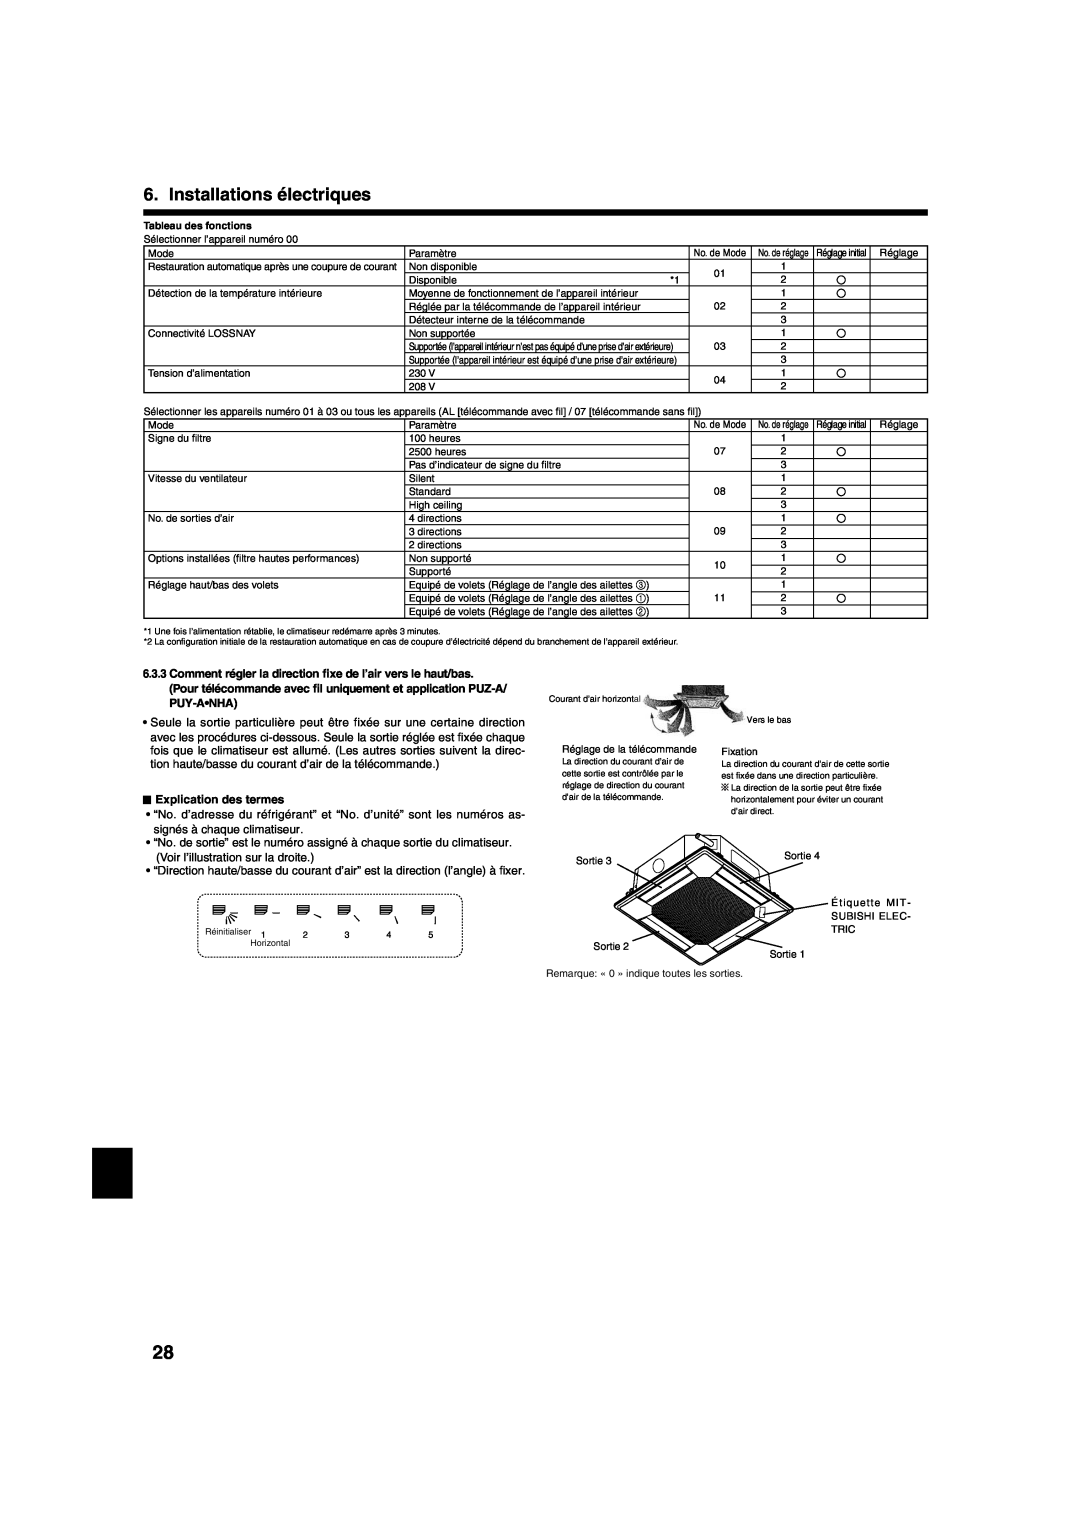 Mitsumi electronic PLA-ABA installation manual Installations électriques, Explication des termes 